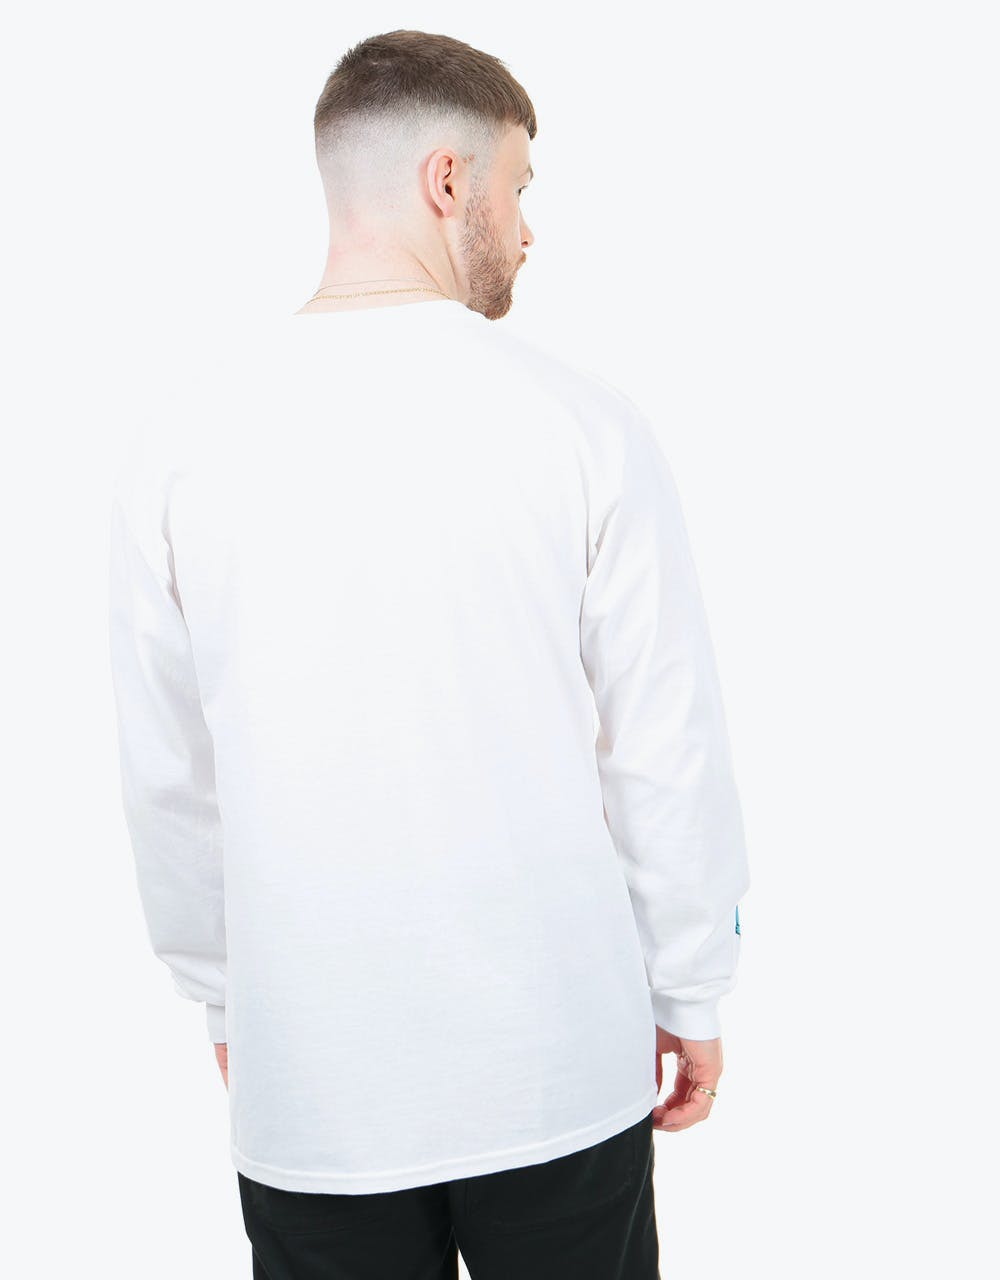 Leon Karssen Hug Yourself T-Shirt - White